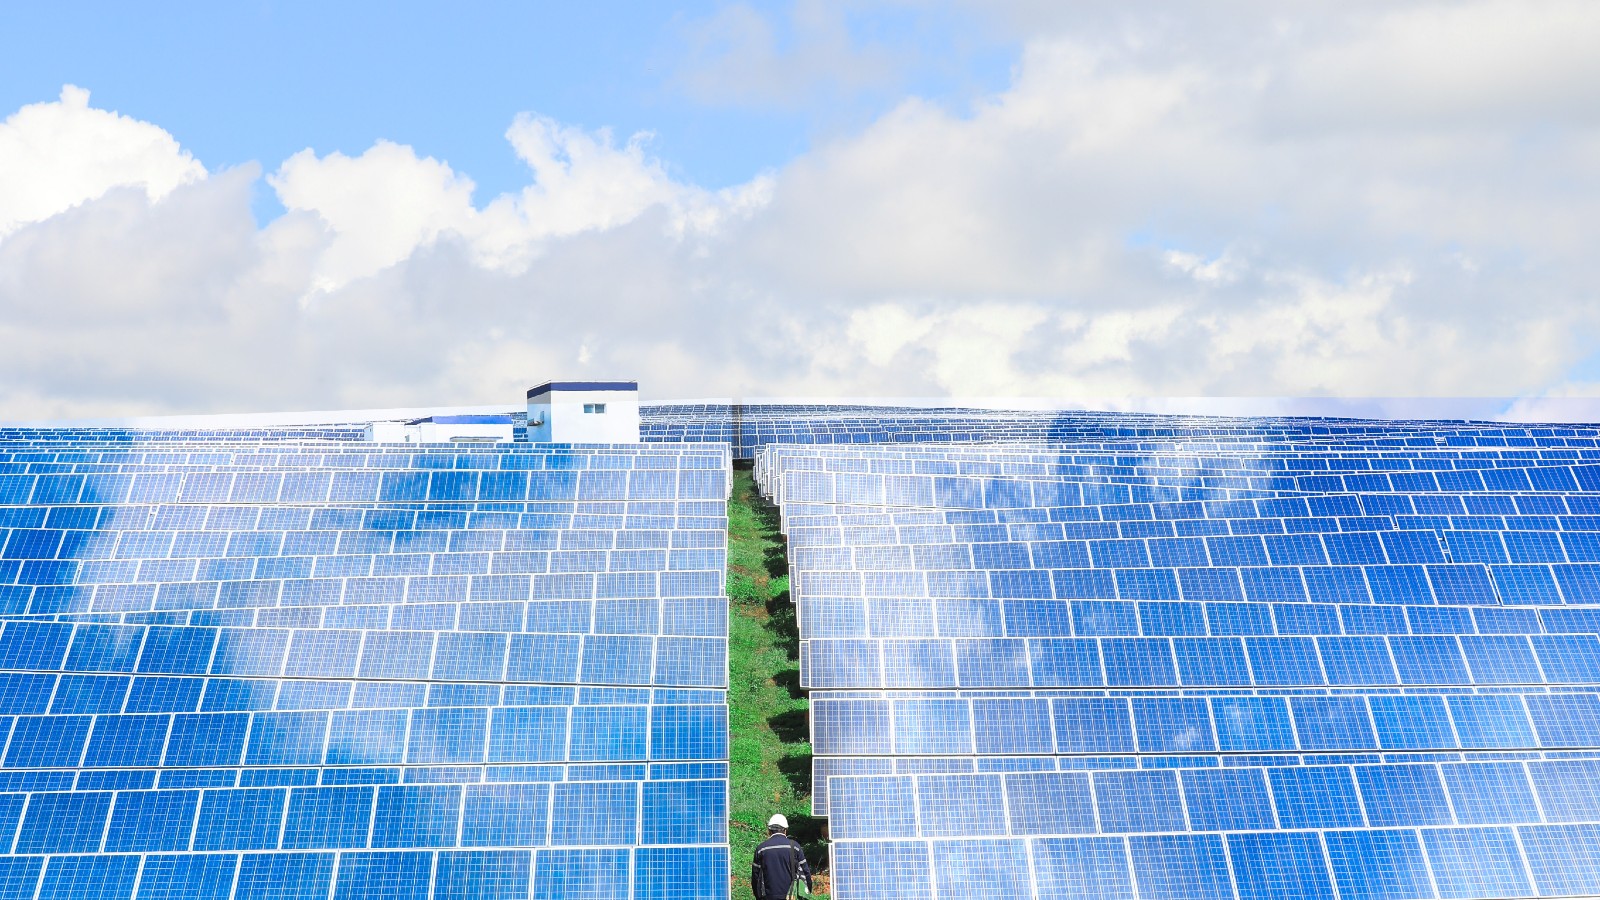 Xicun Solar Farm